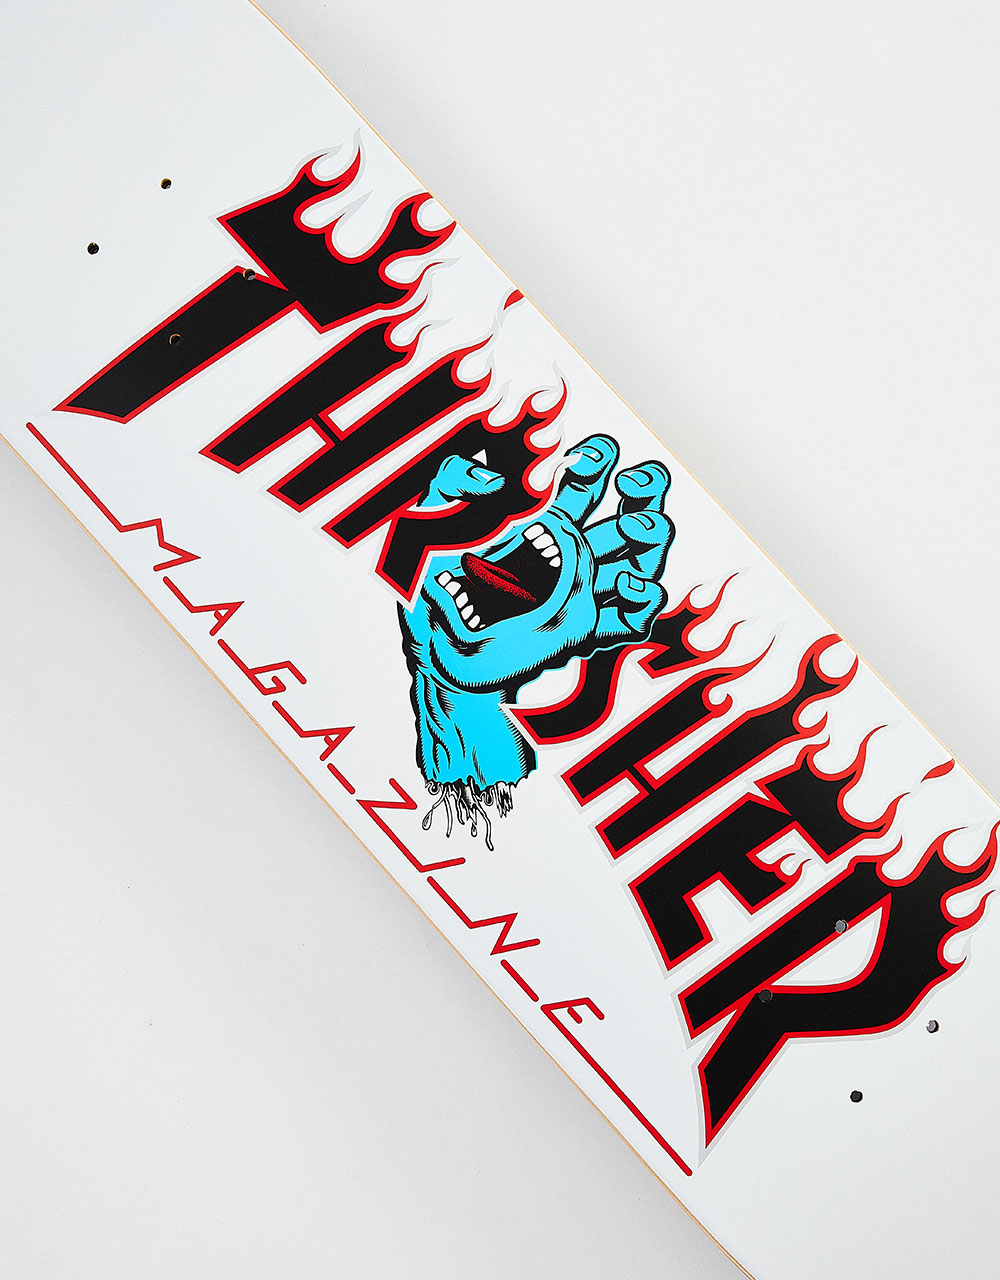 Santa Cruz x Thrasher Screaming Flame Logo Skateboard Deck - 8"